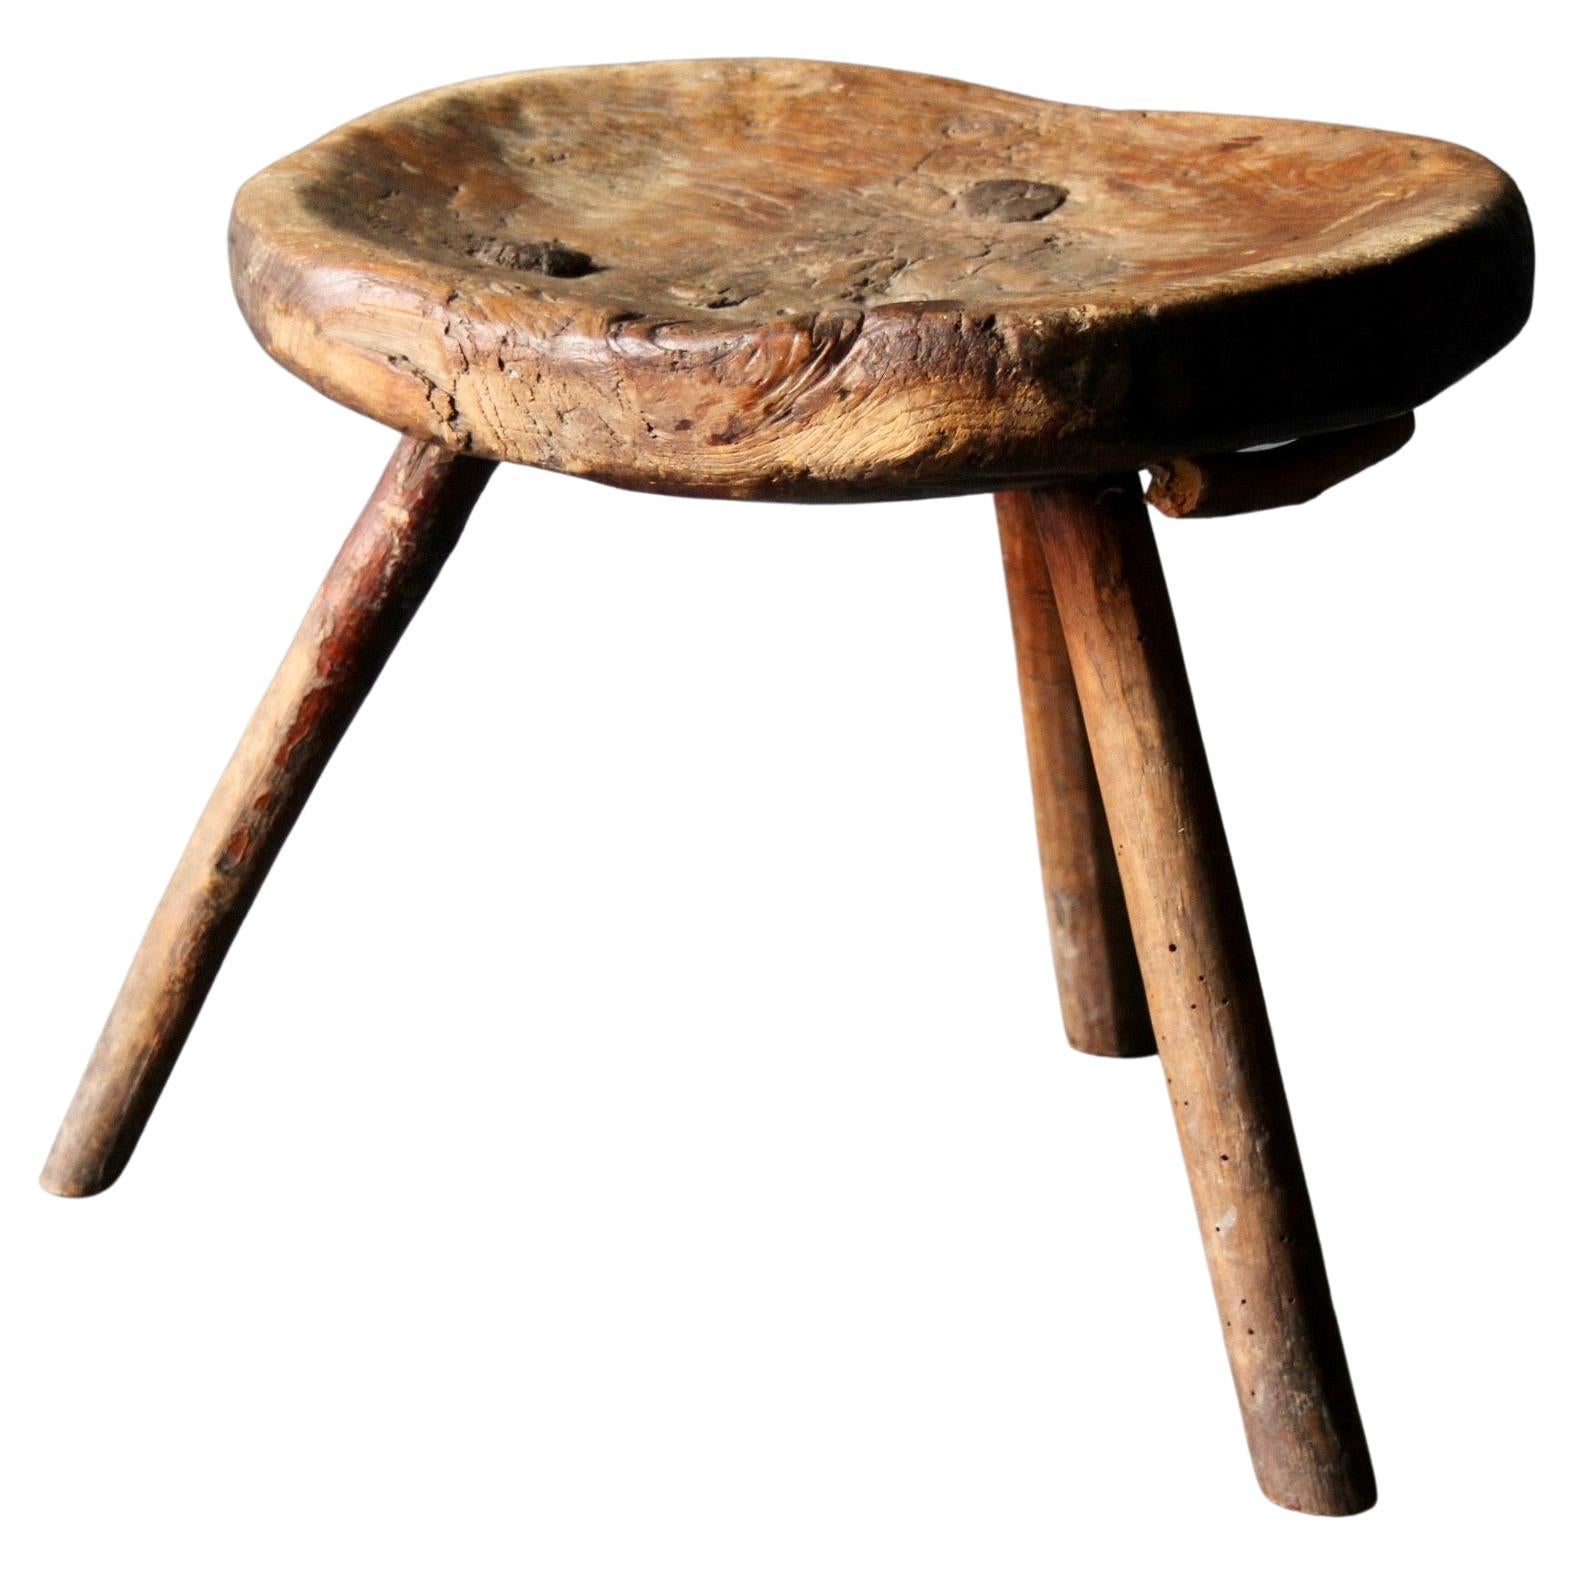 Swiss alp pine stool For Sale